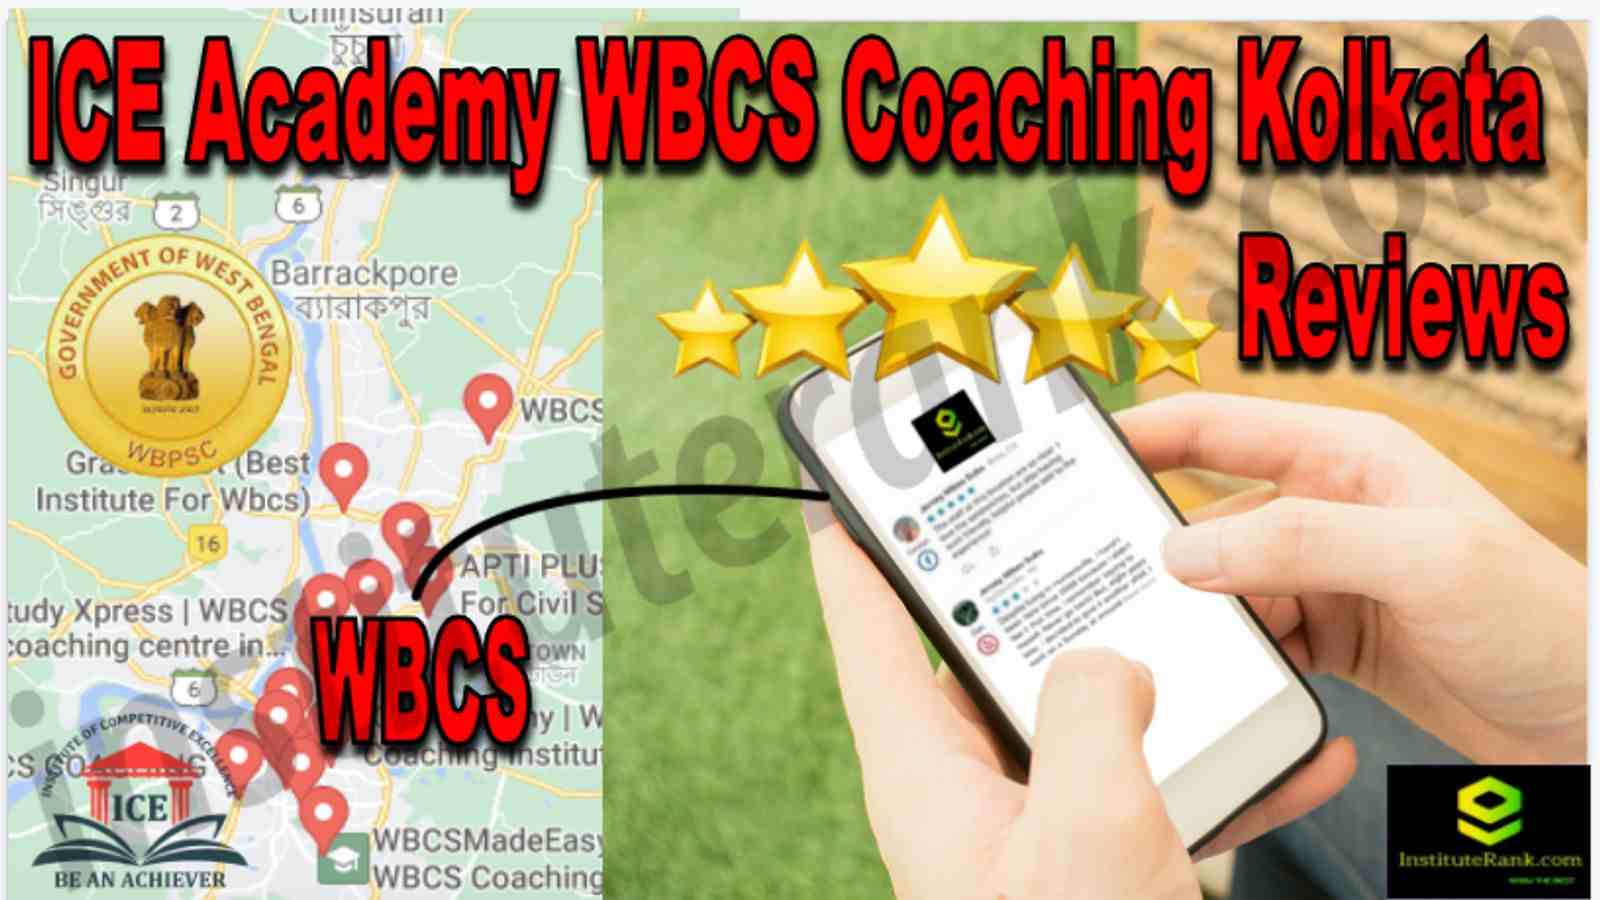 ICE Academy WBSC Coaching in Kolkata Reviews